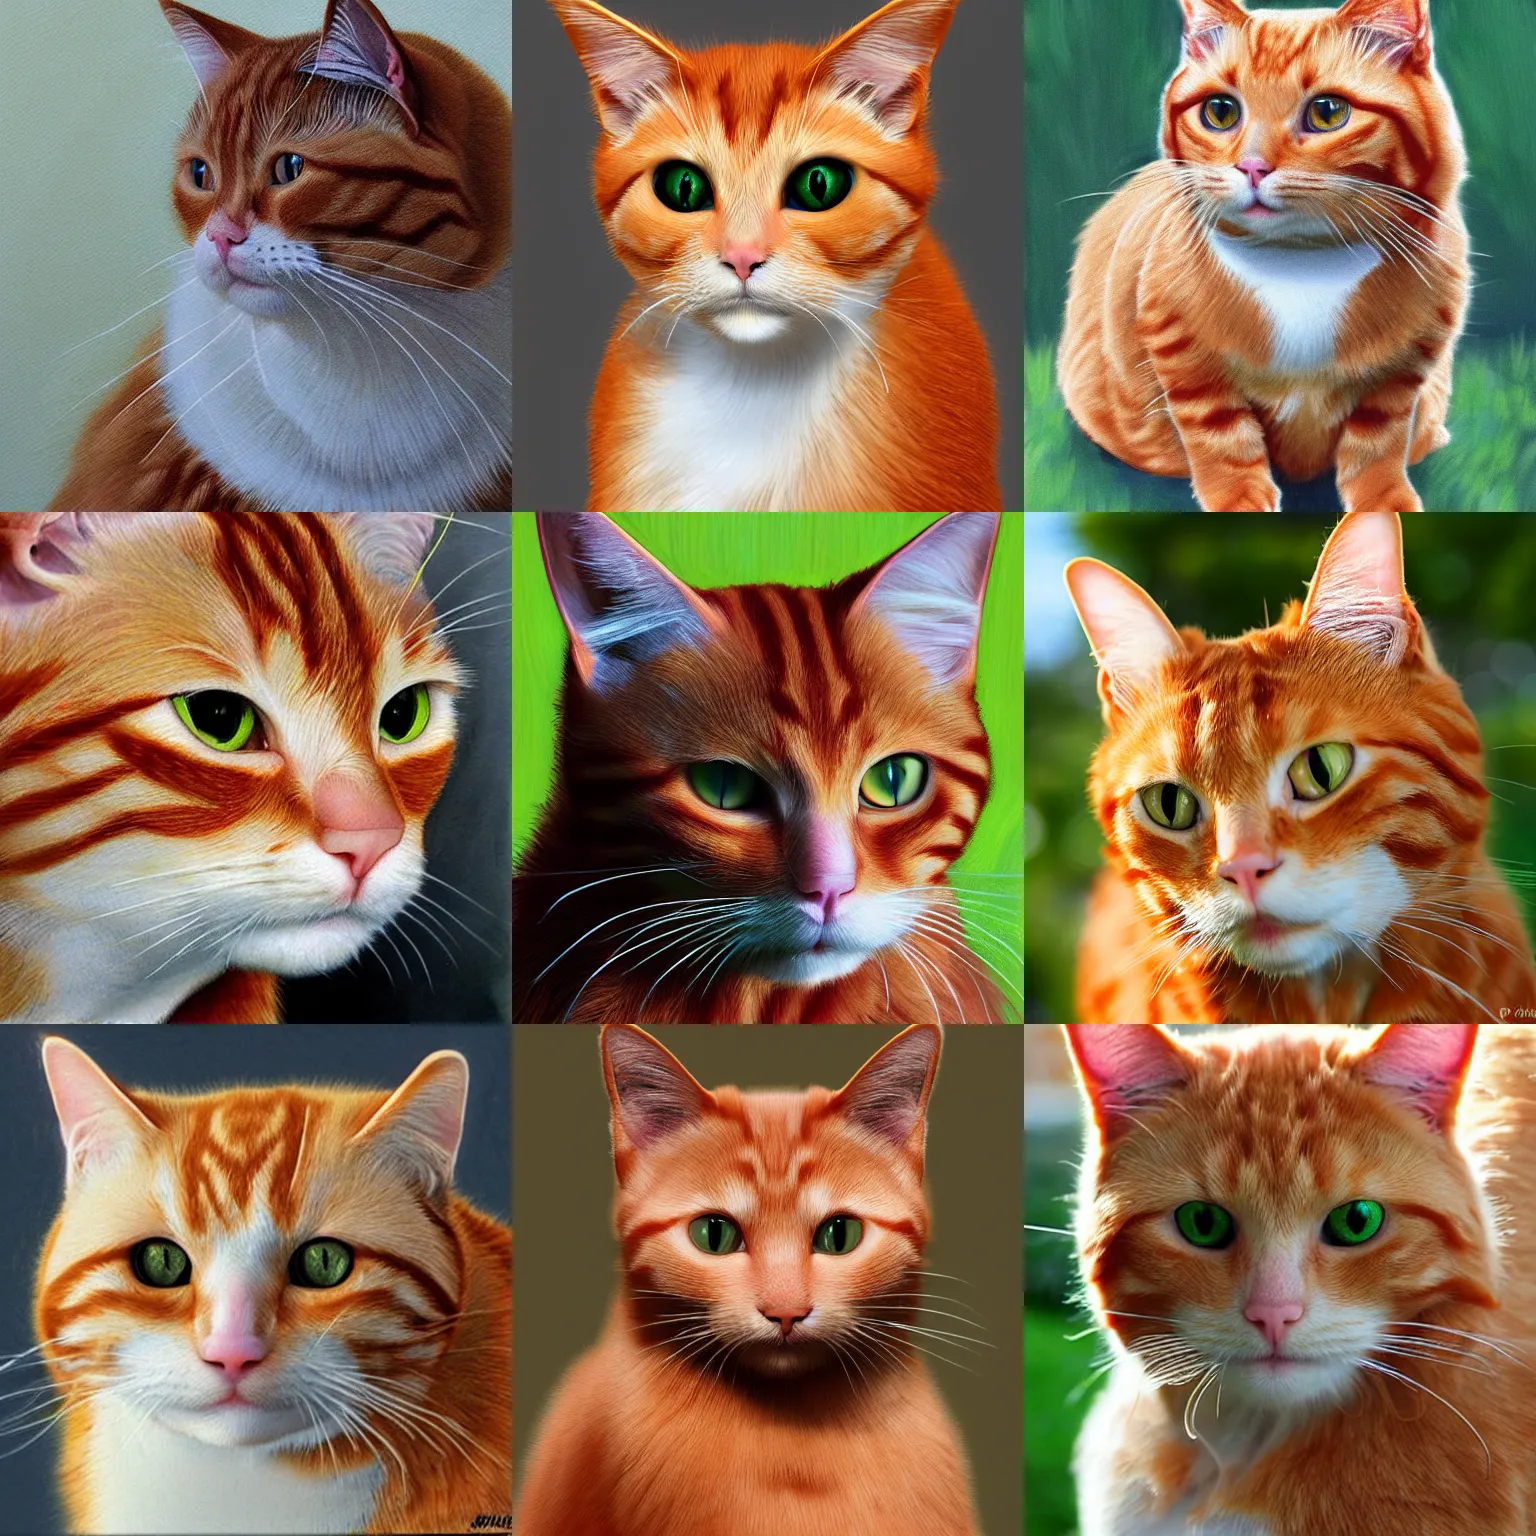 Prompt: ginger cat, photorealistic